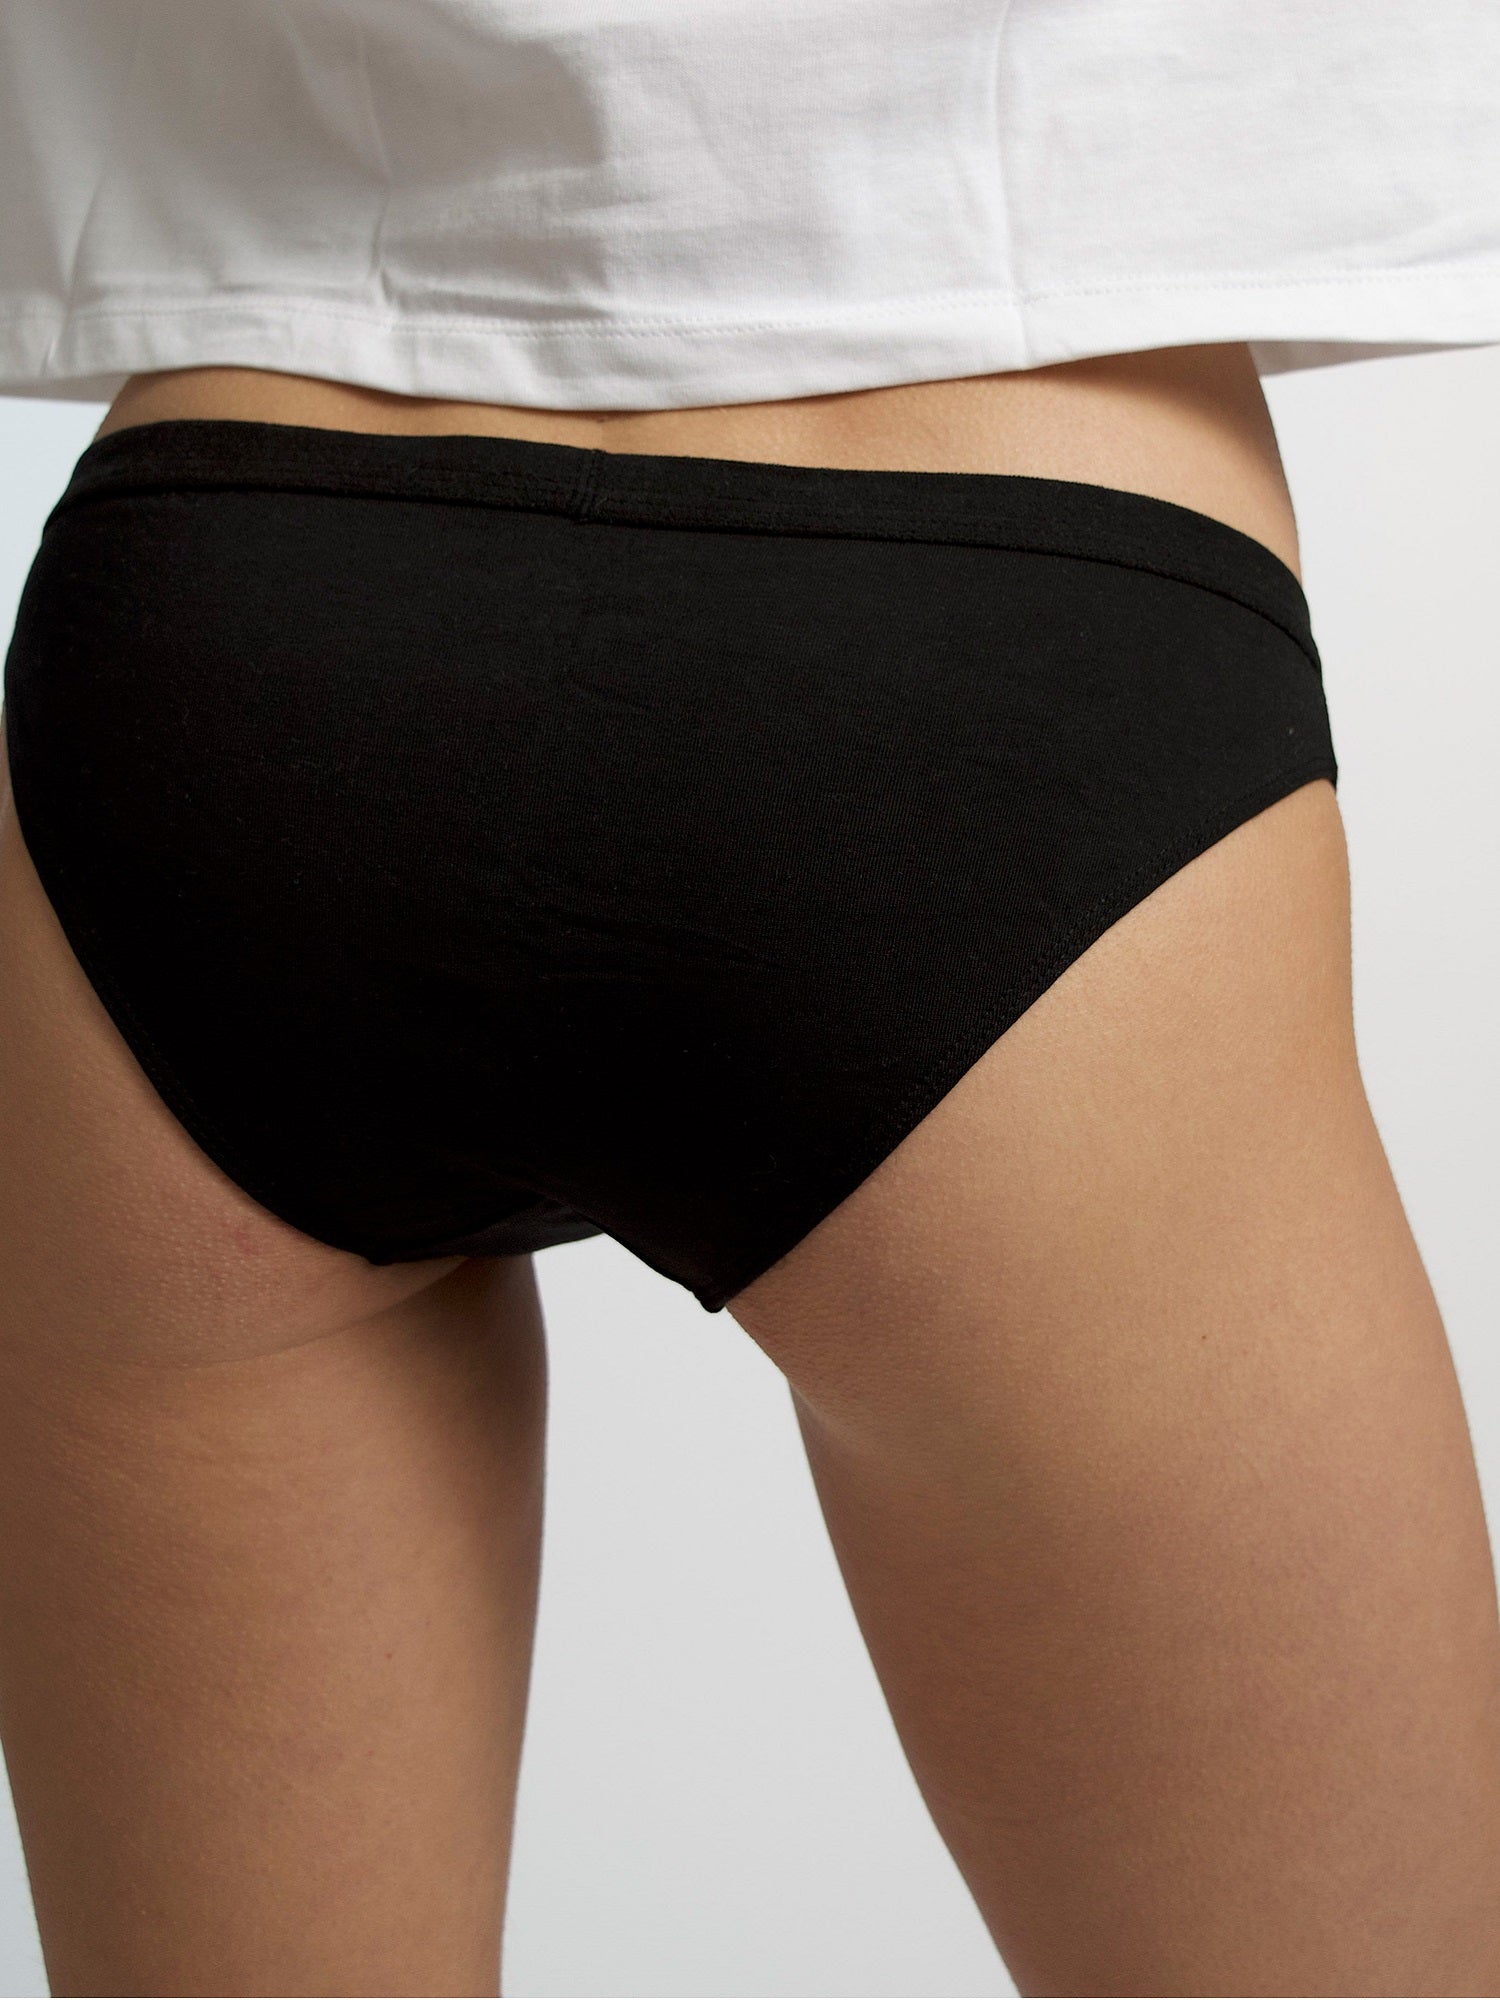 Snocks Womens Underwear 3x Black Thongs for Women Cotton